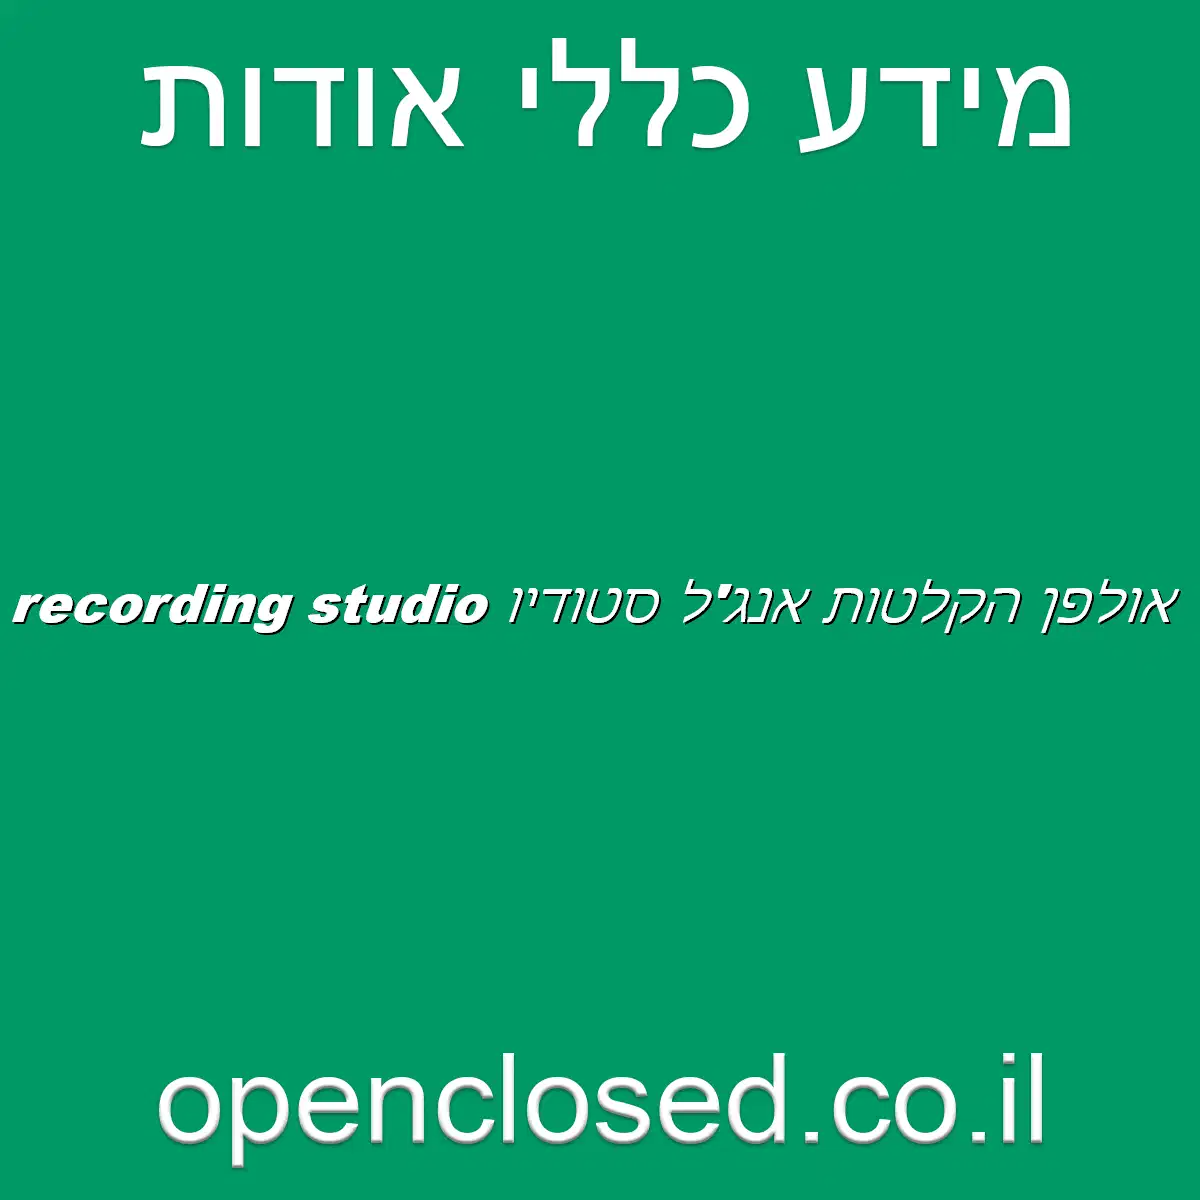 Angel Studios recording studio אולפן הקלטות אנג’ל סטודיו